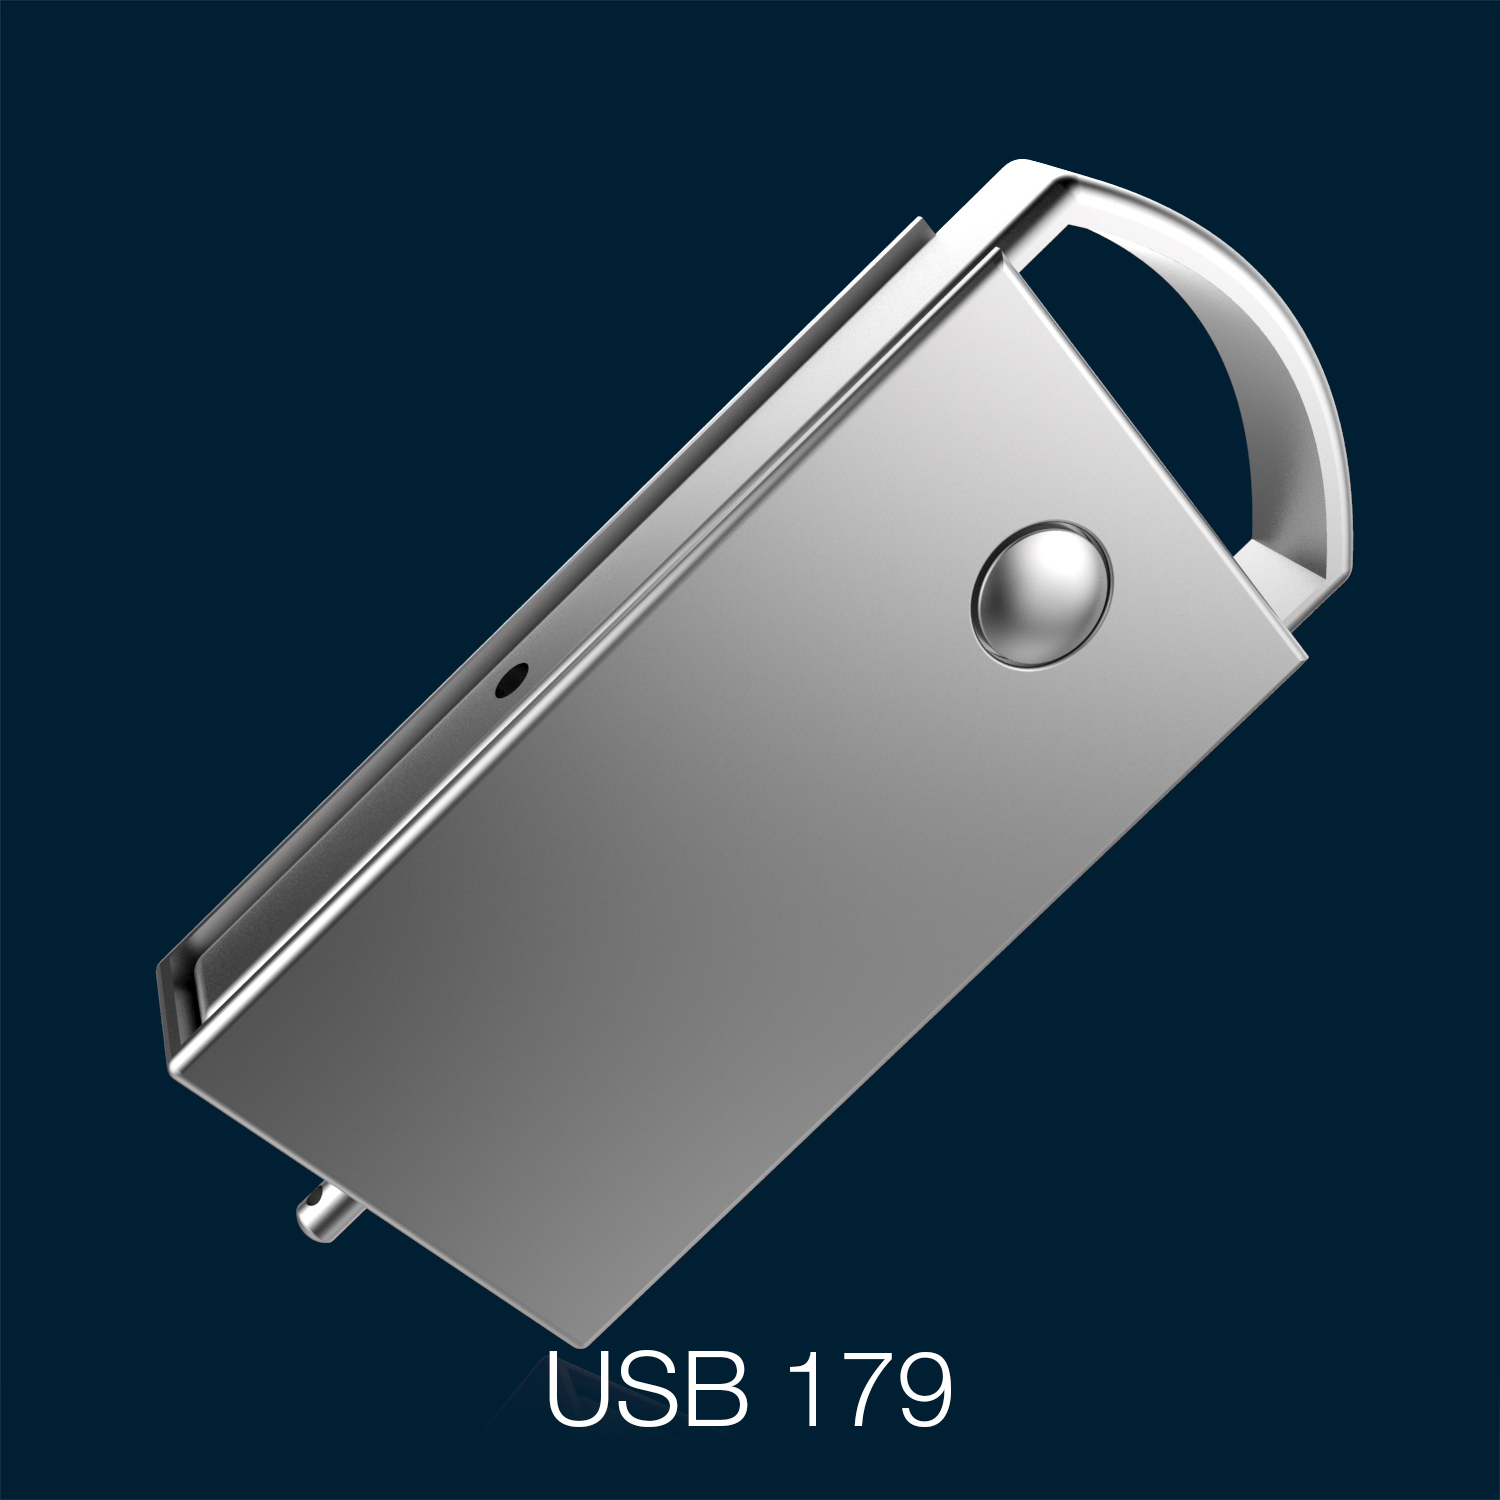 USB 179